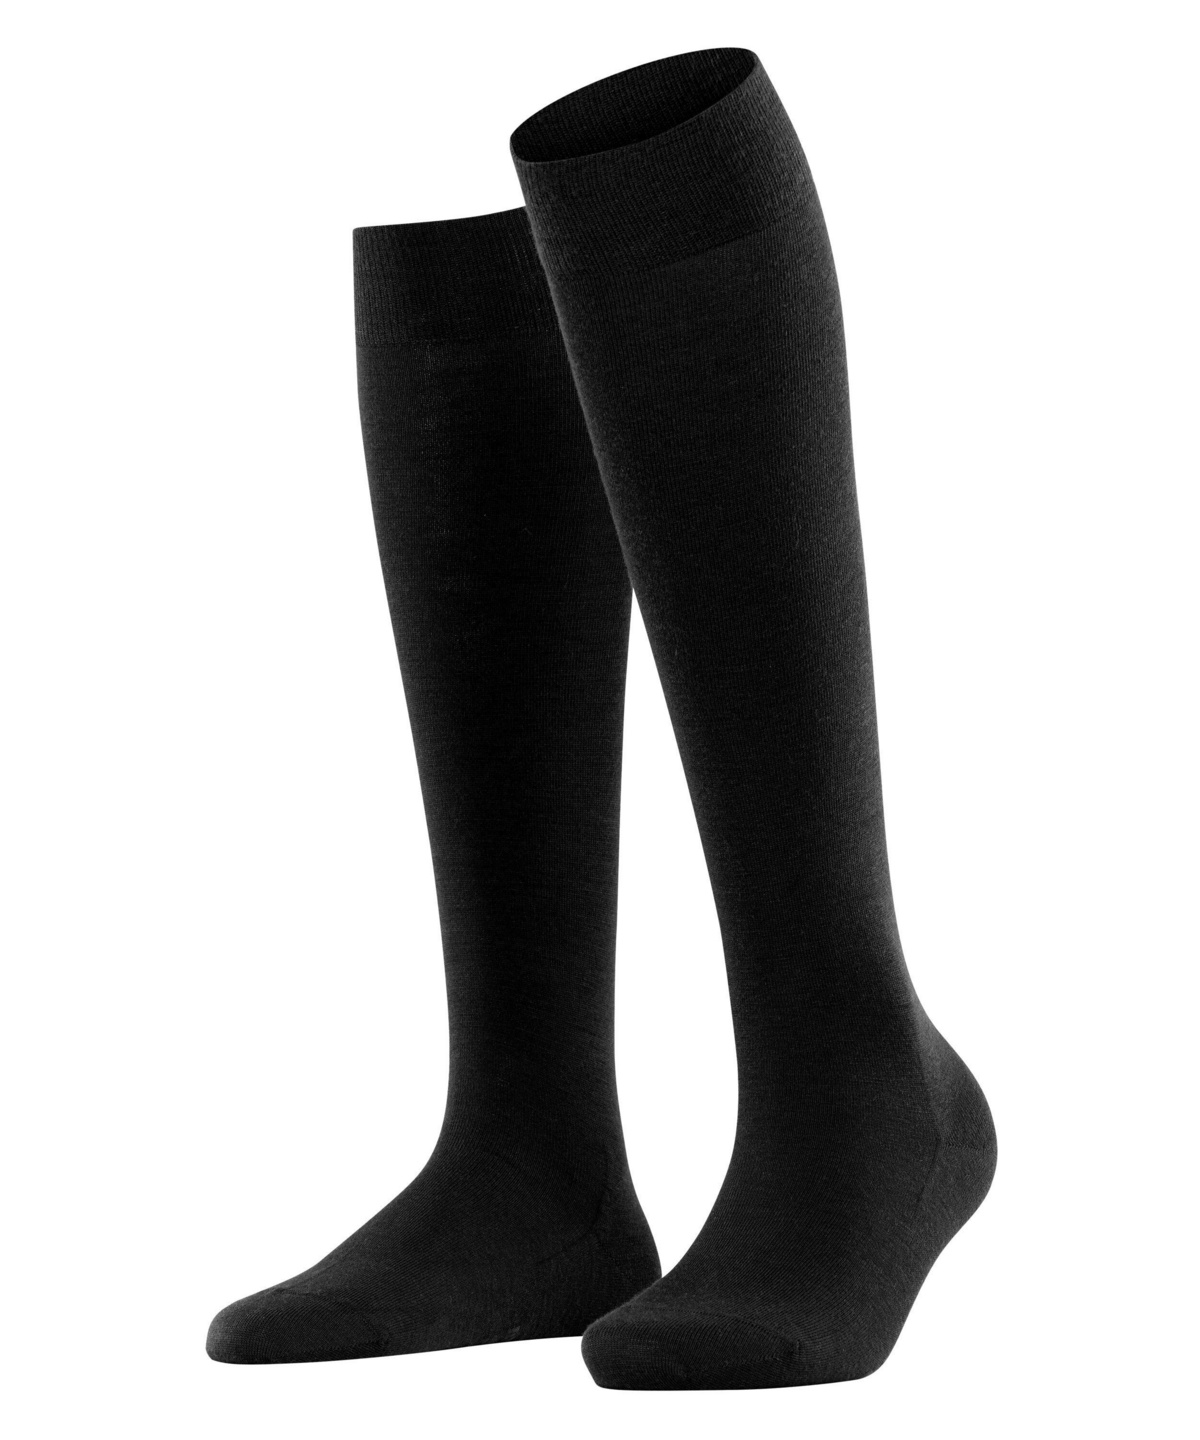 Women's Soft Black Opaque Knee-High Socks with Grip Tops 842C